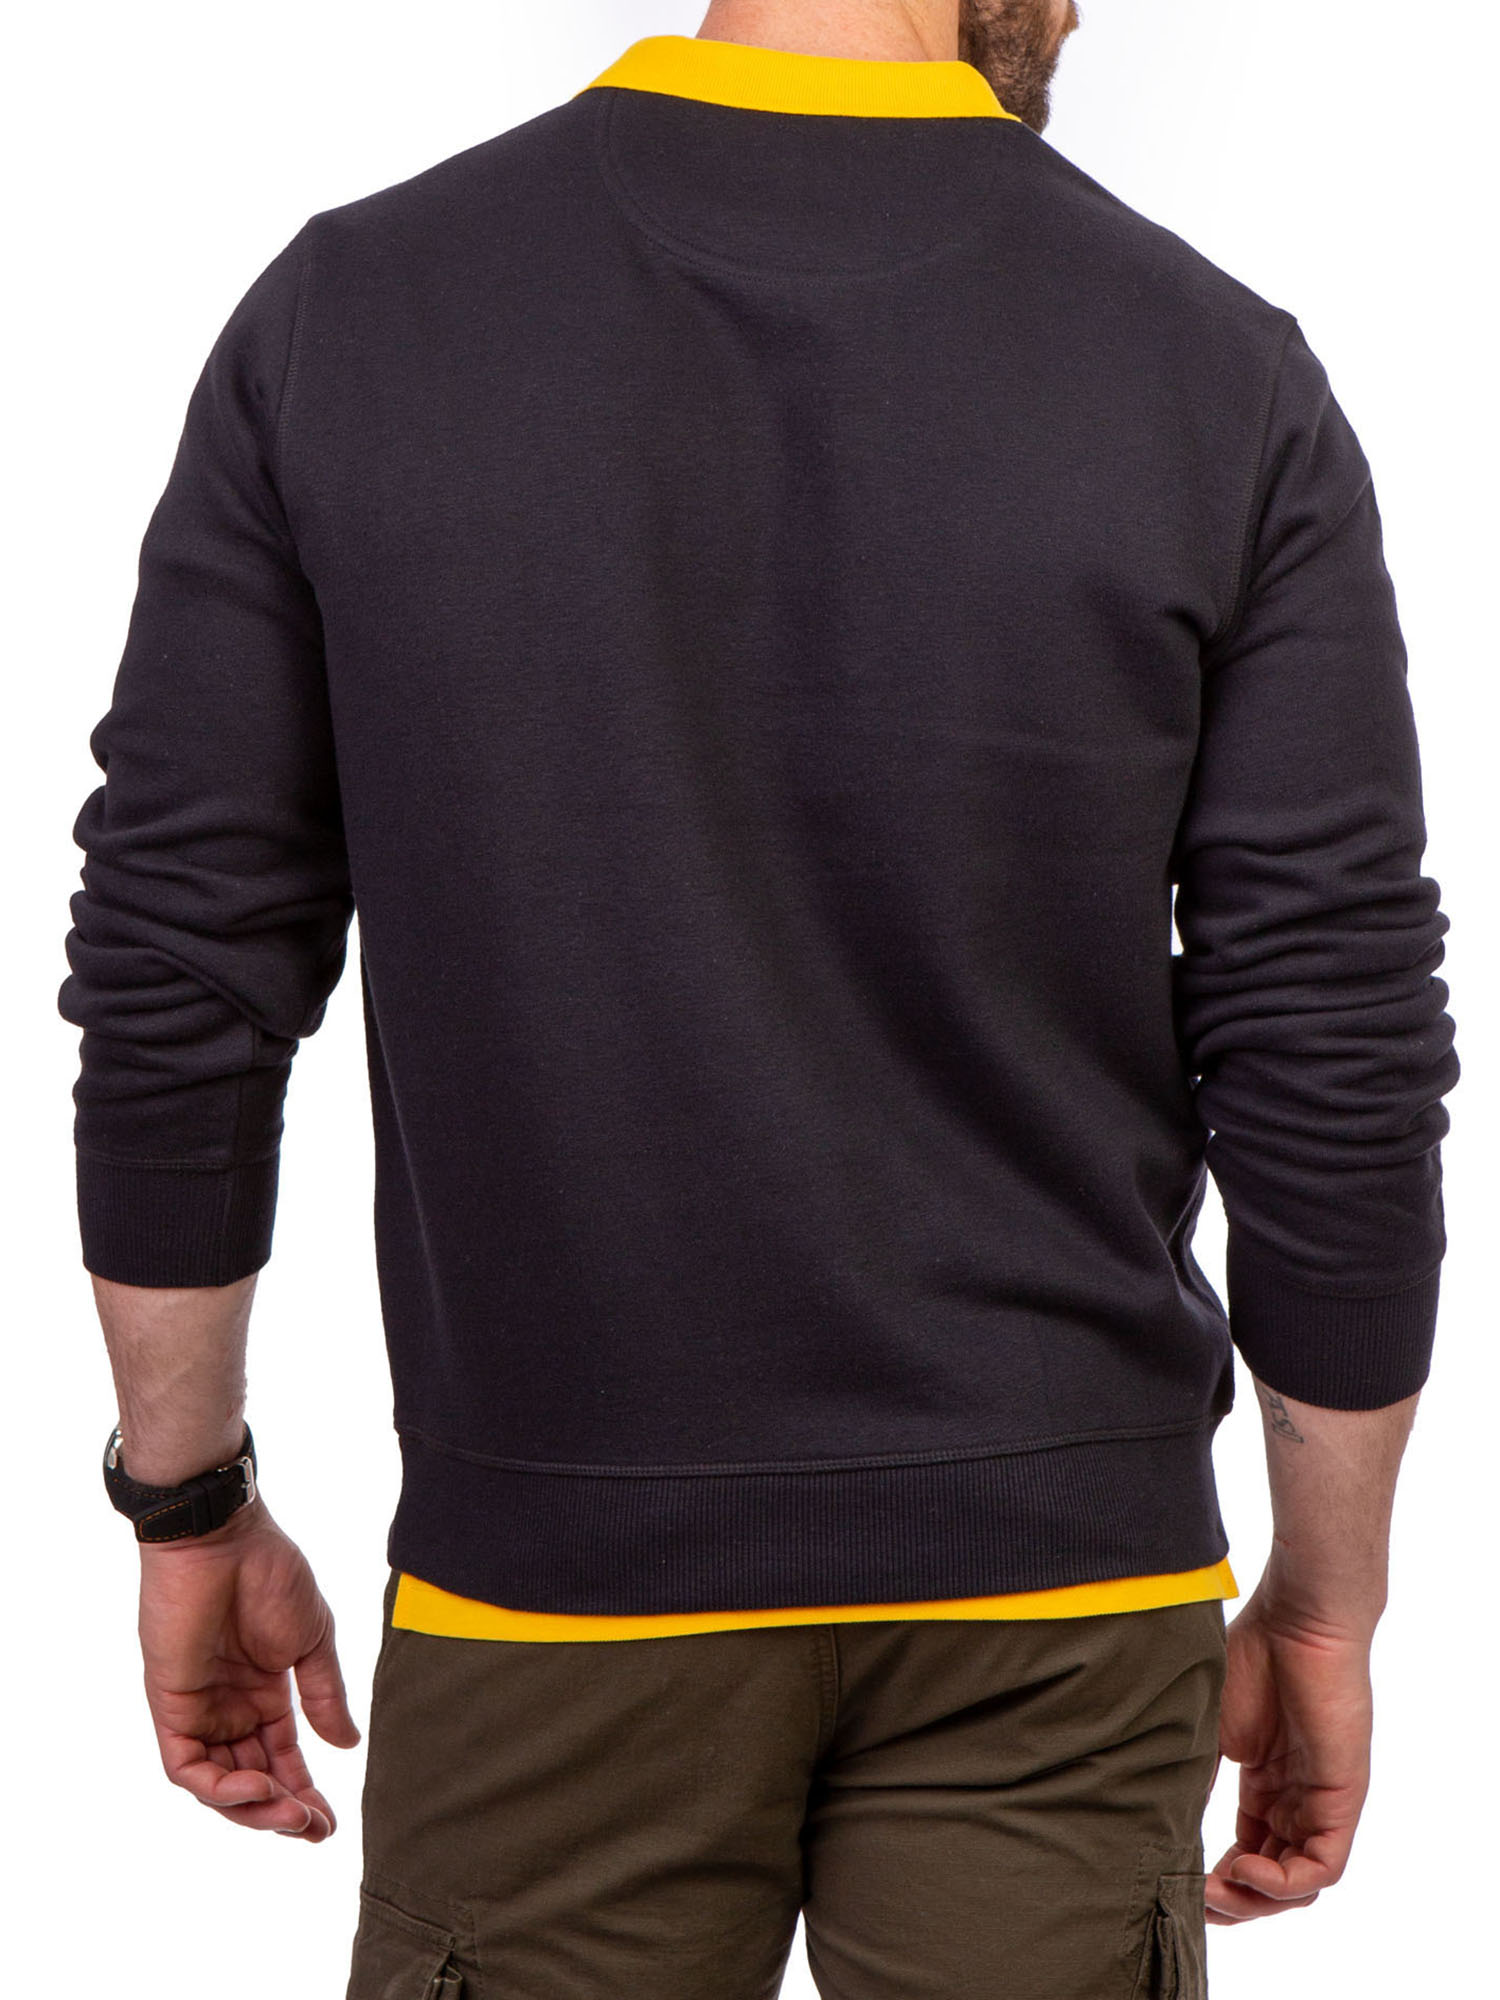 U.S. Polo Assn. Men's Knit Sweater Shirt - image 3 of 5